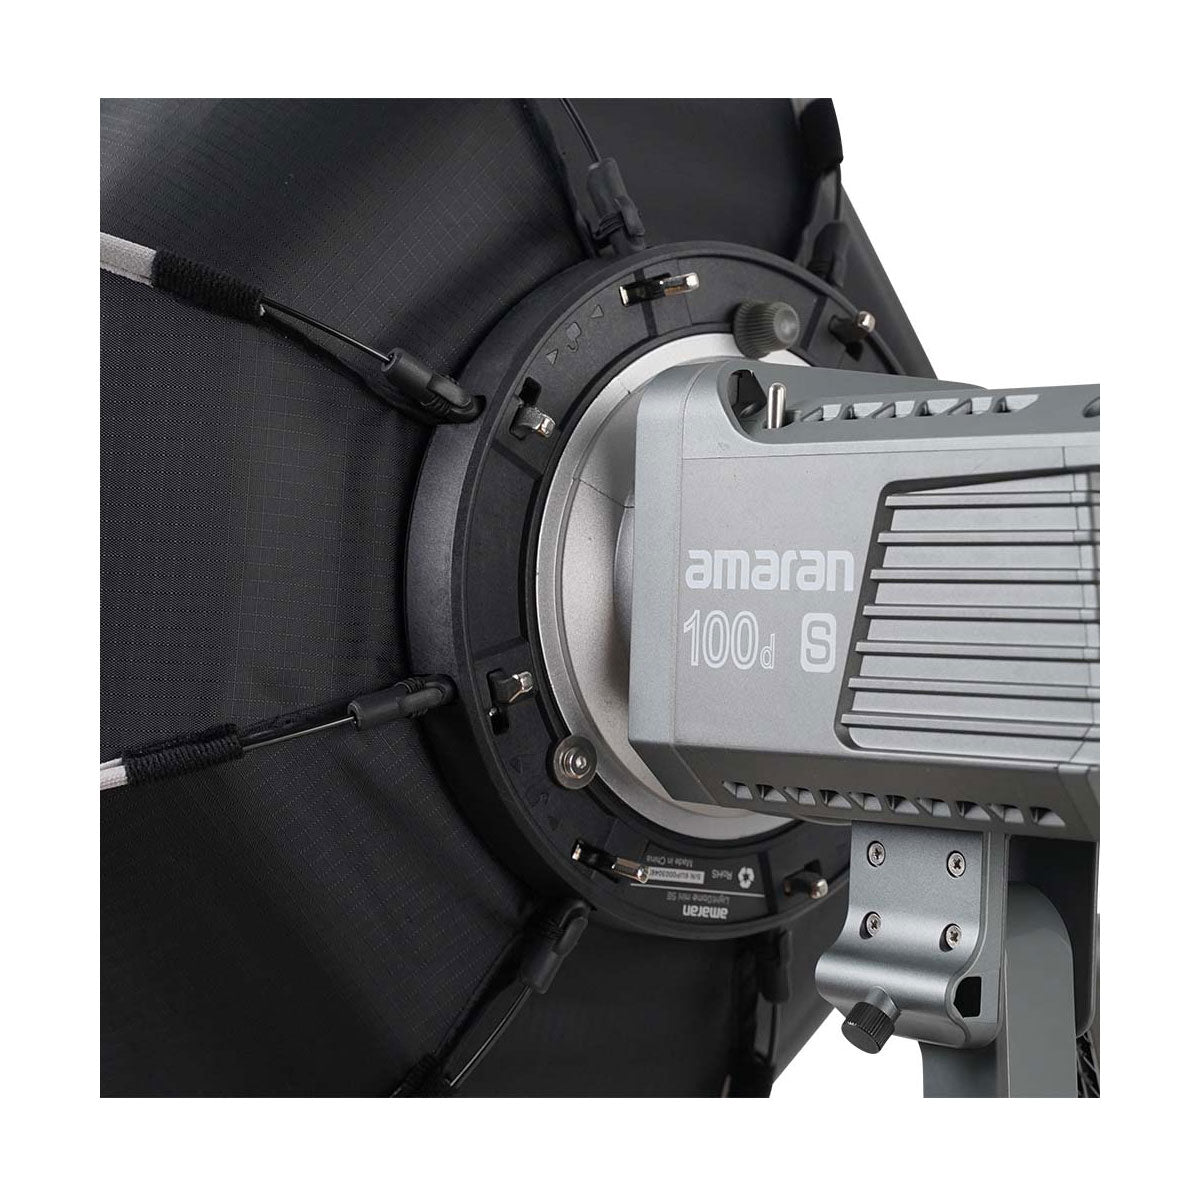 Amaran 300c LED Light AP30011A10 Video Lighting Accessories